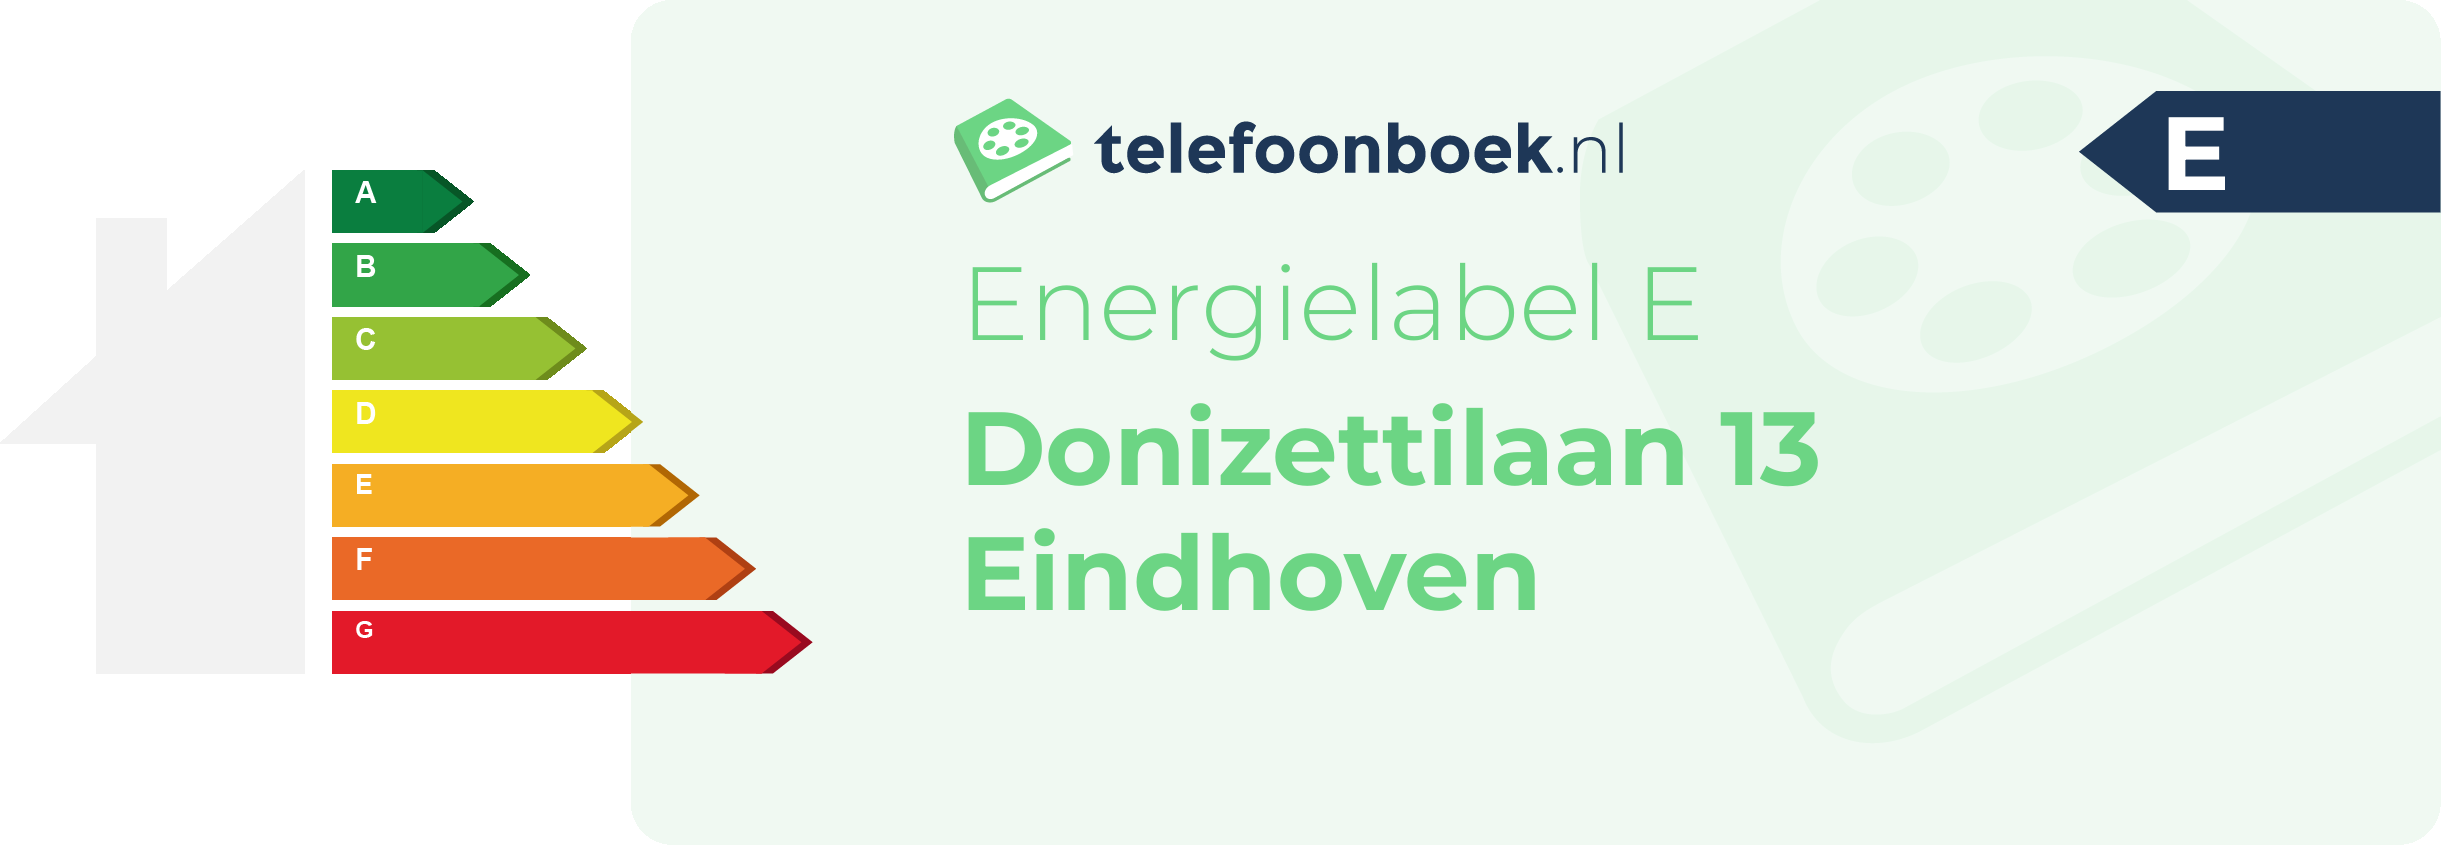 Energielabel Donizettilaan 13 Eindhoven